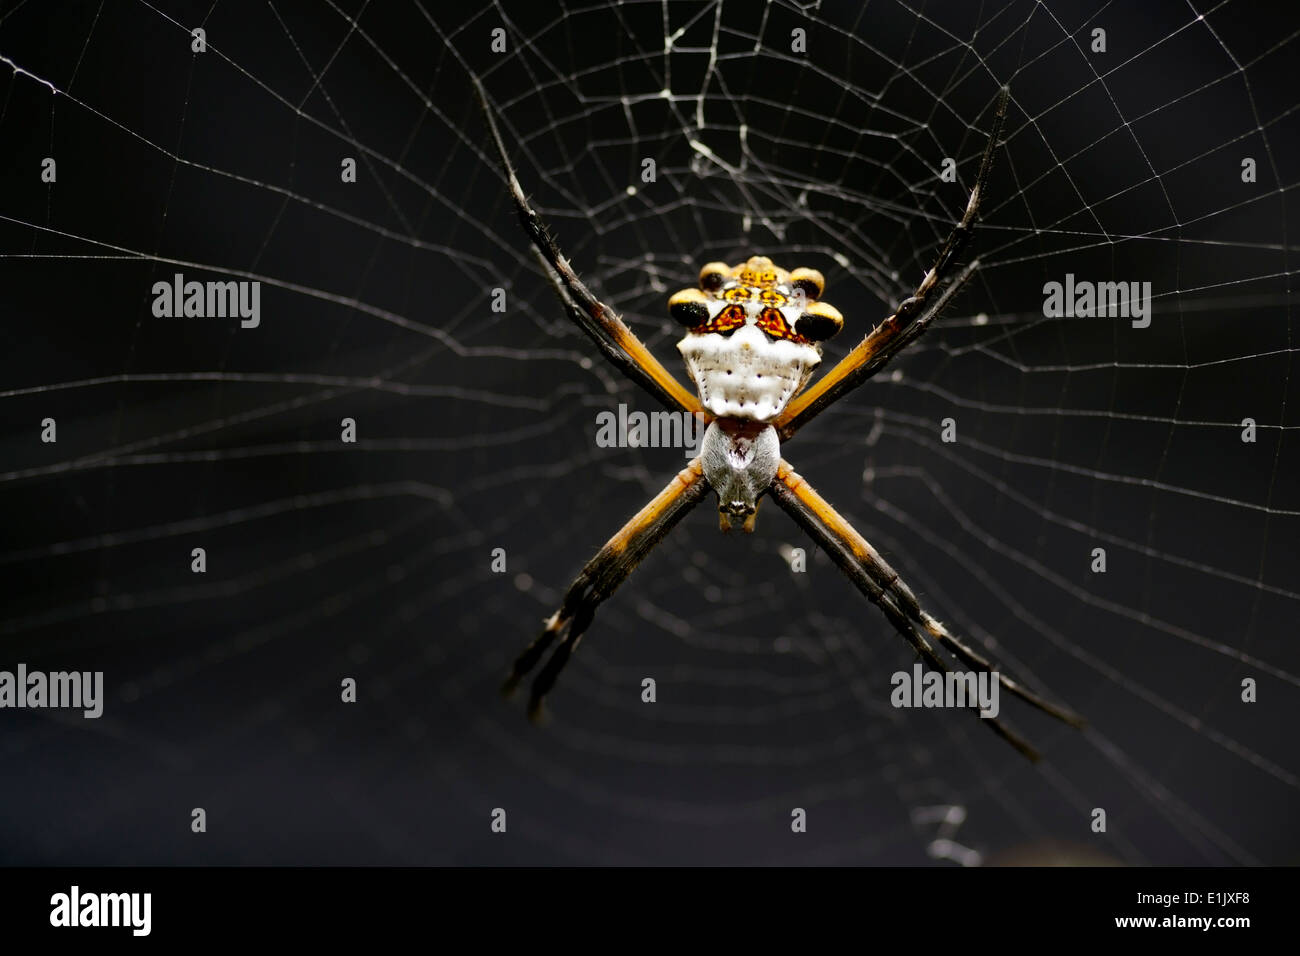 Silver Argiope Spider - Camp Lula Sams - Brownsville, Texas USA Stock Photo